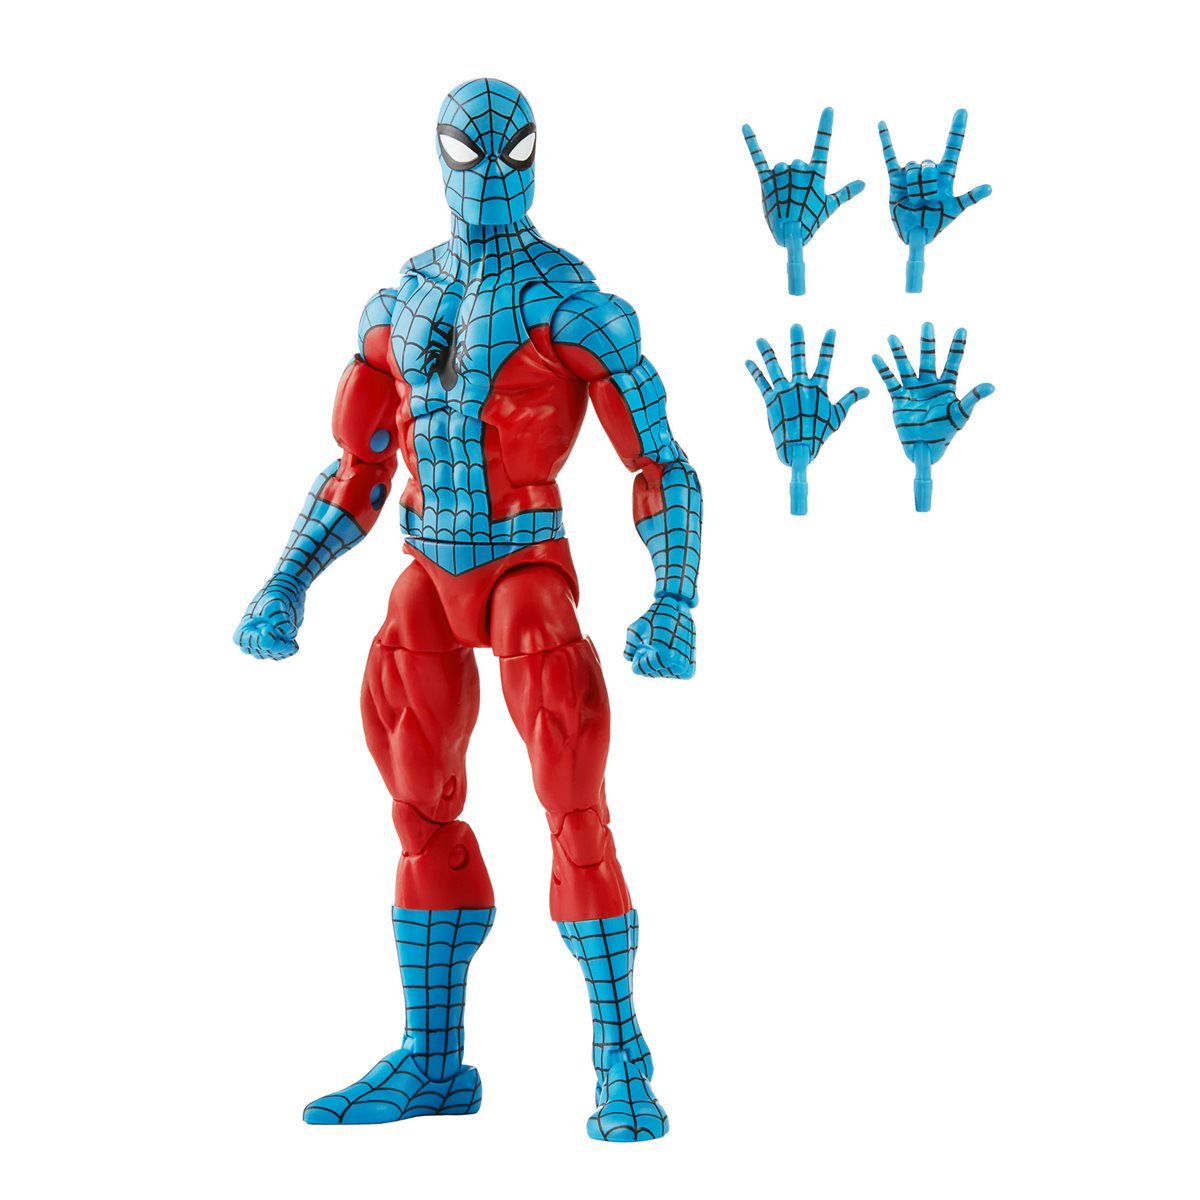 Web-Man from Marvel Legends Spider-Man action figure